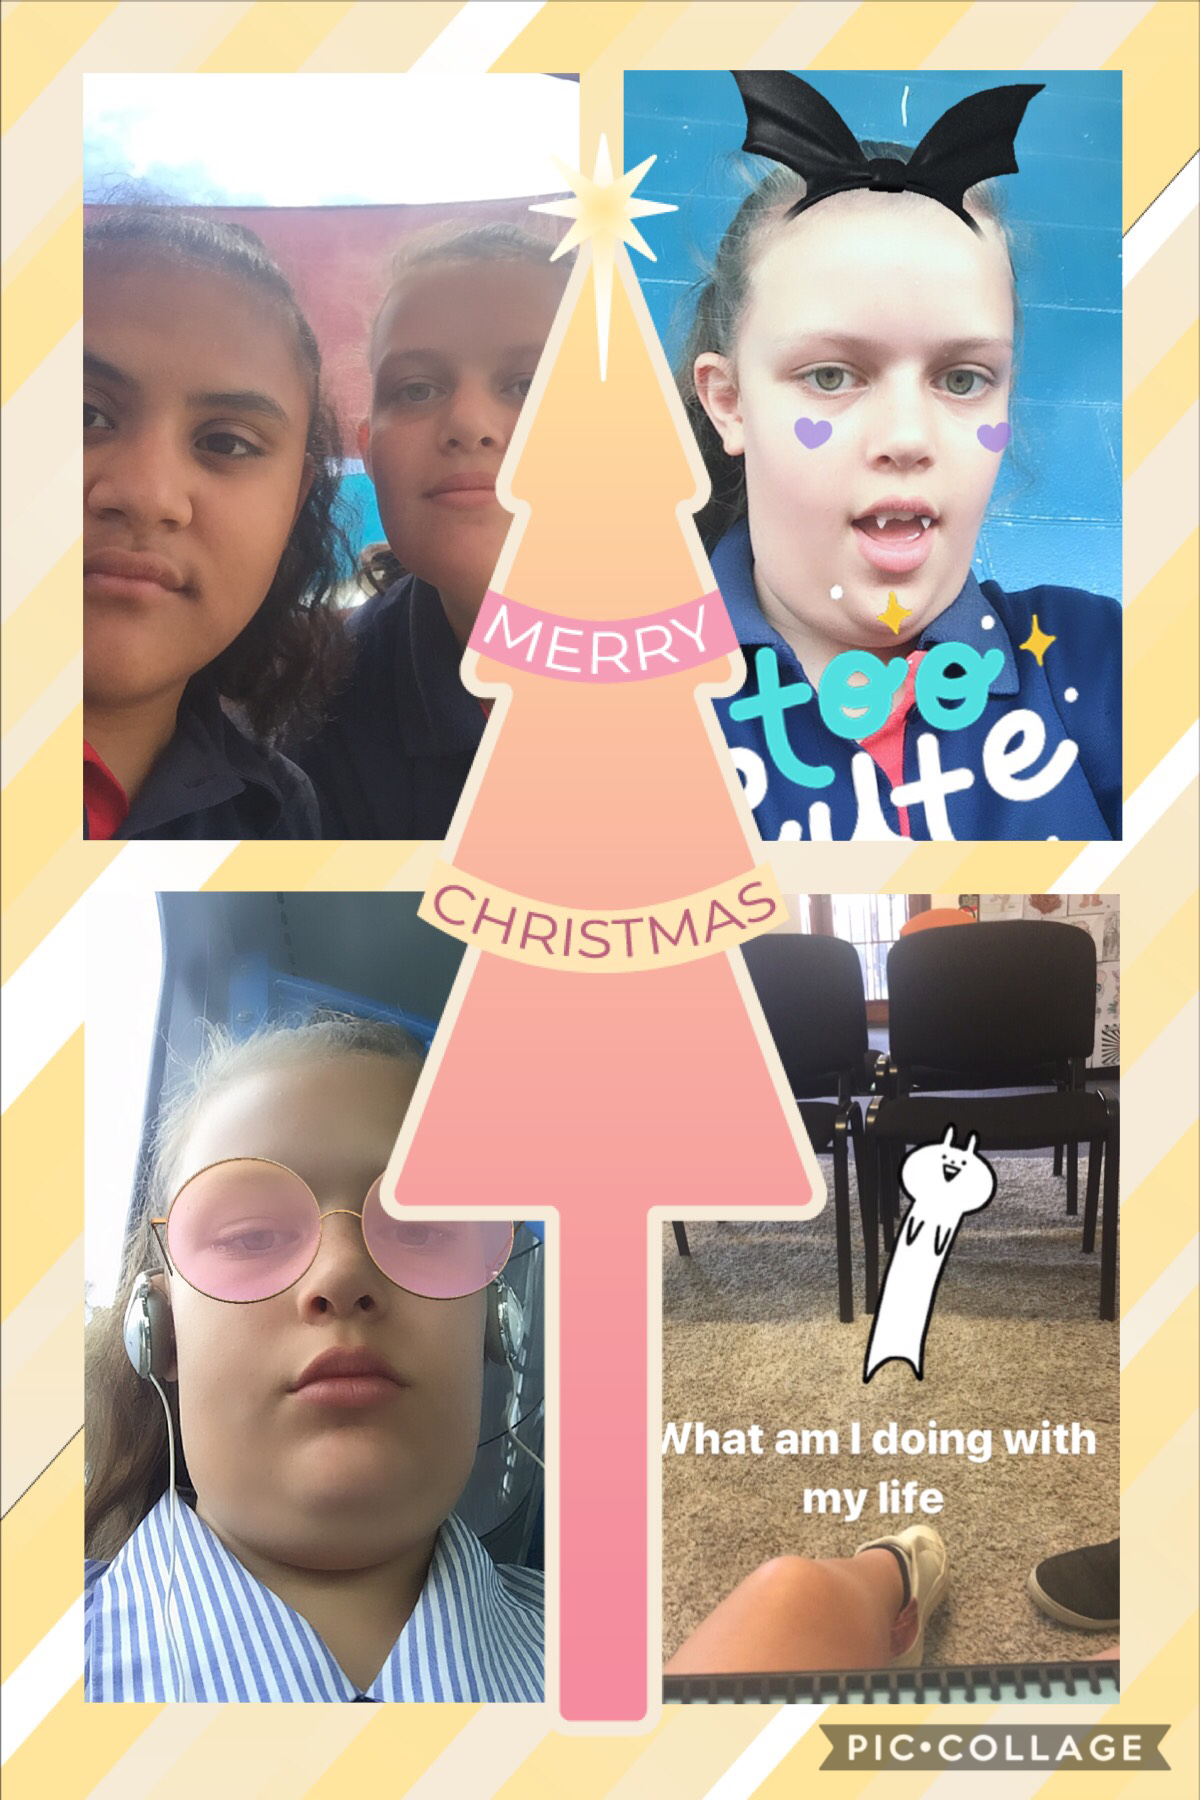 Merry Christmas people